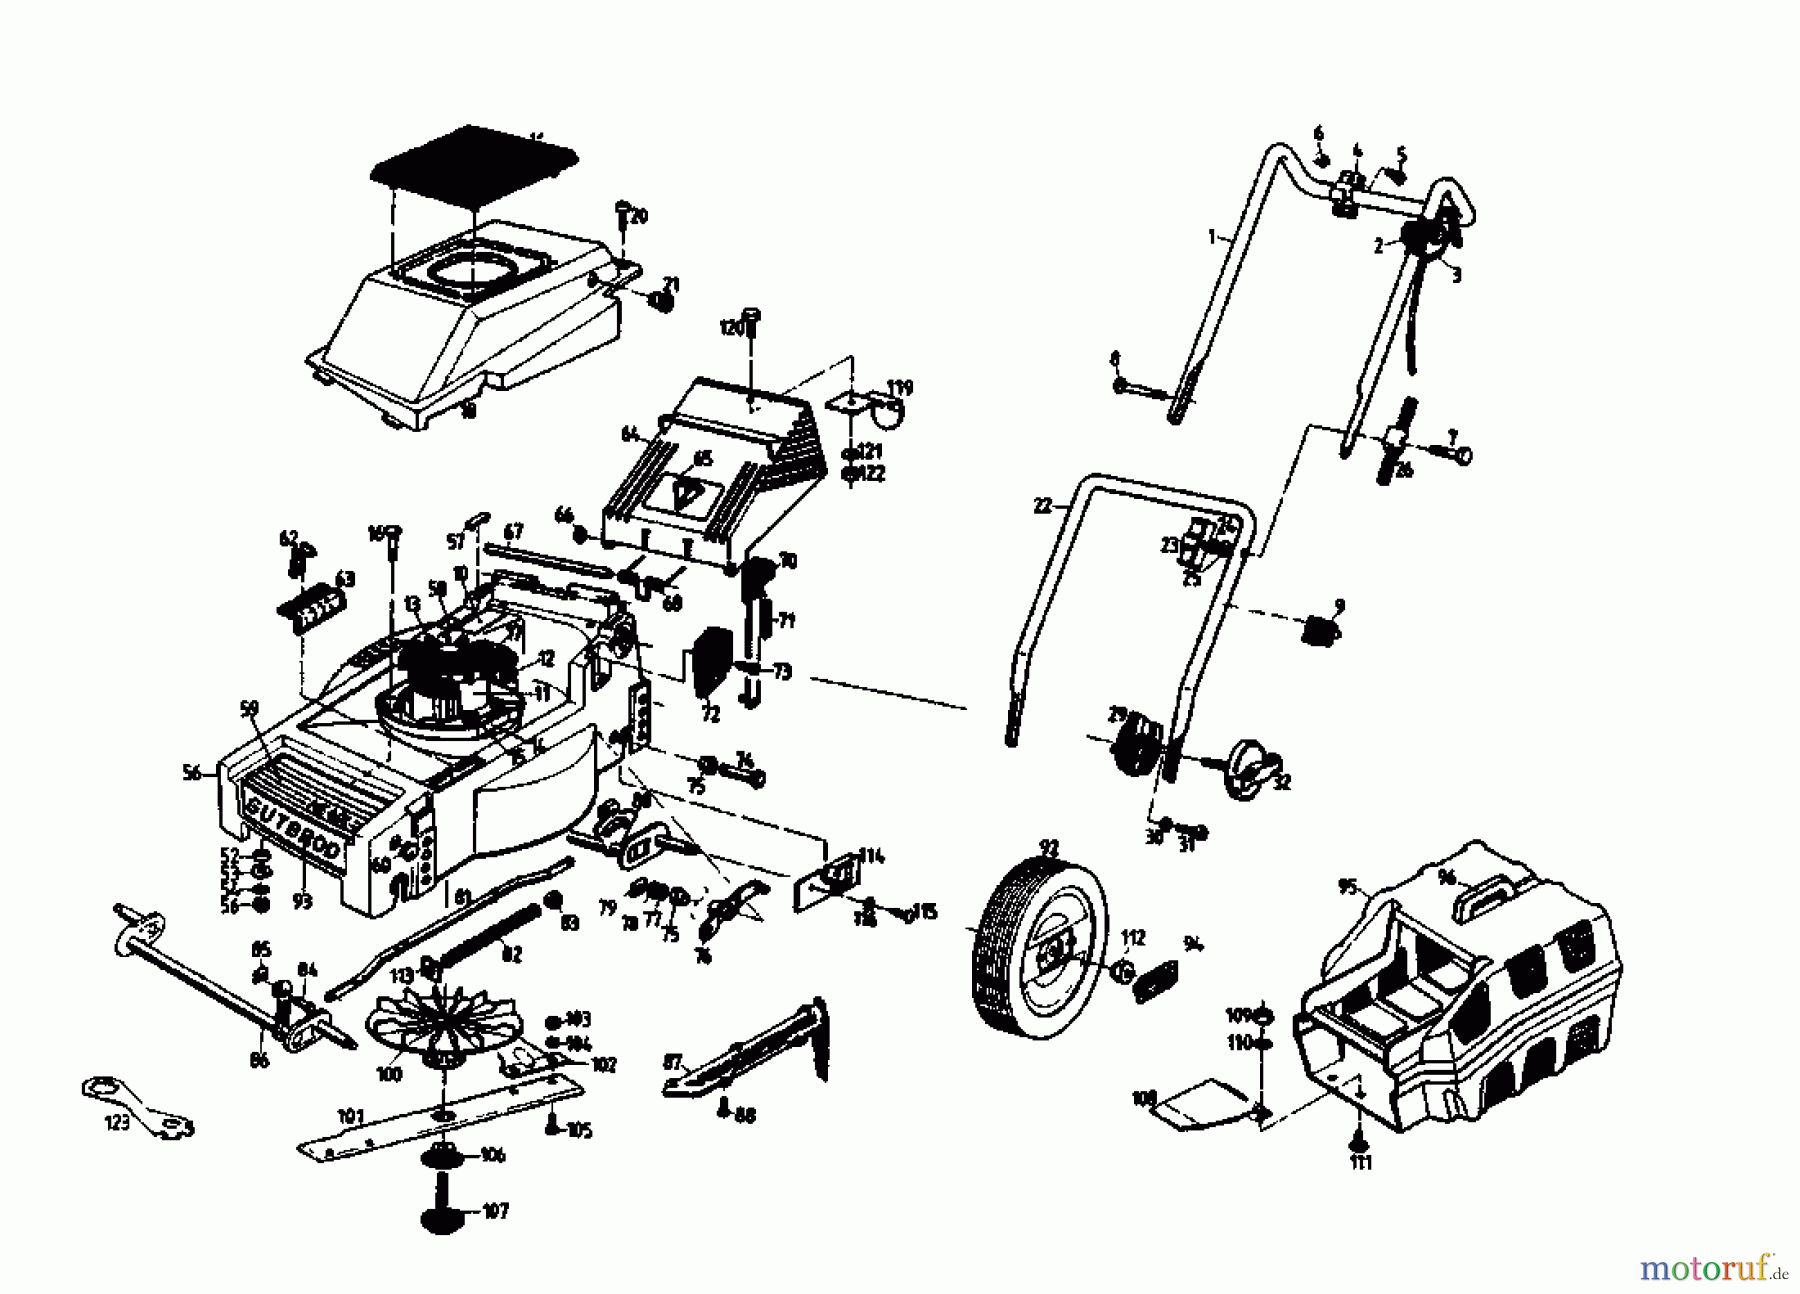  Gutbrod Electric mower HE 40 L 02895.02  (1988) Basic machine